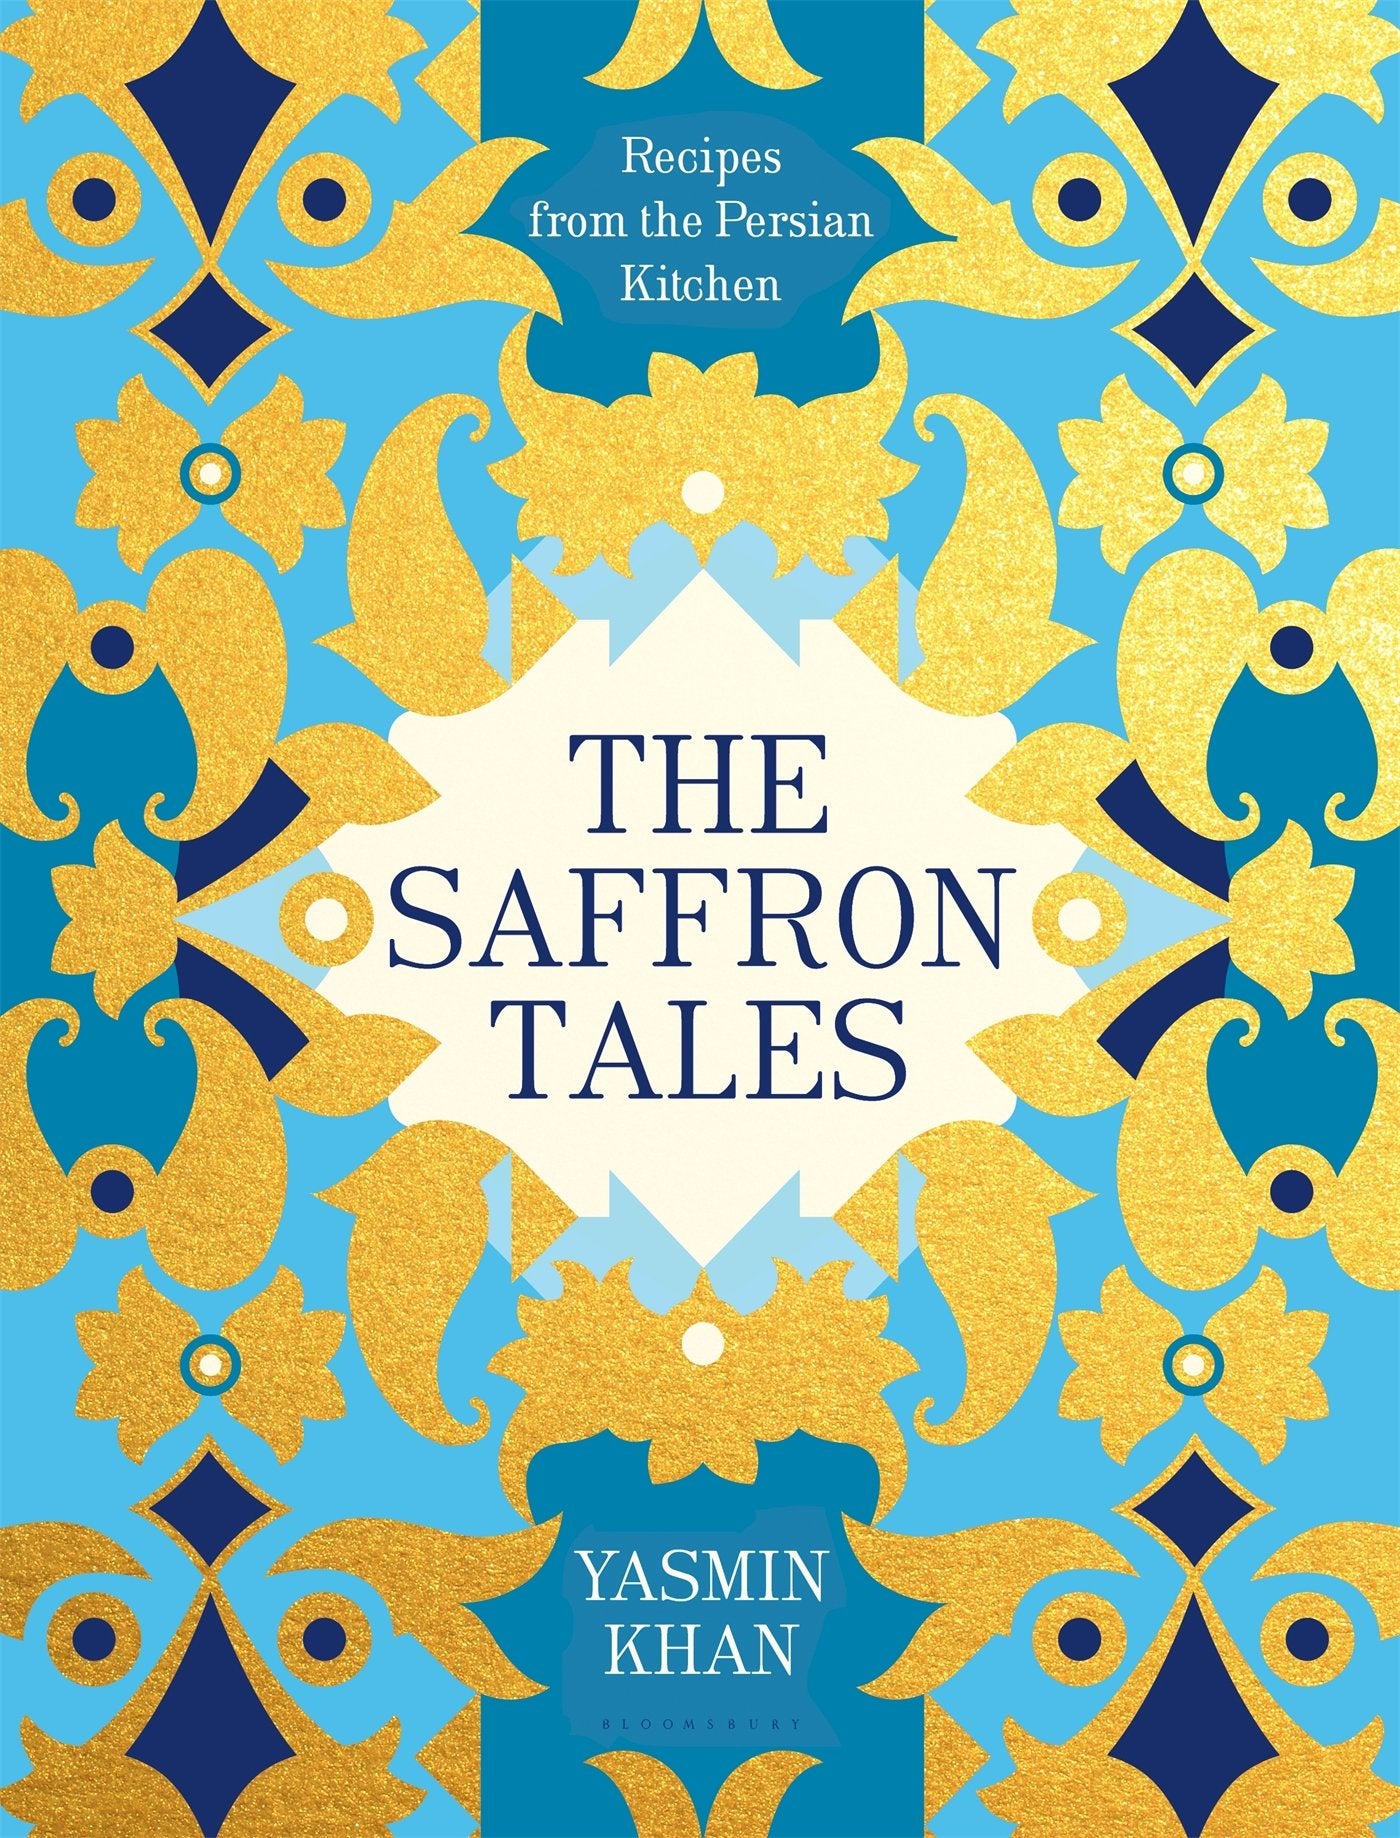 The Saffron Tales: Recipes from the Persian Kitchen (Yasmin Khan)